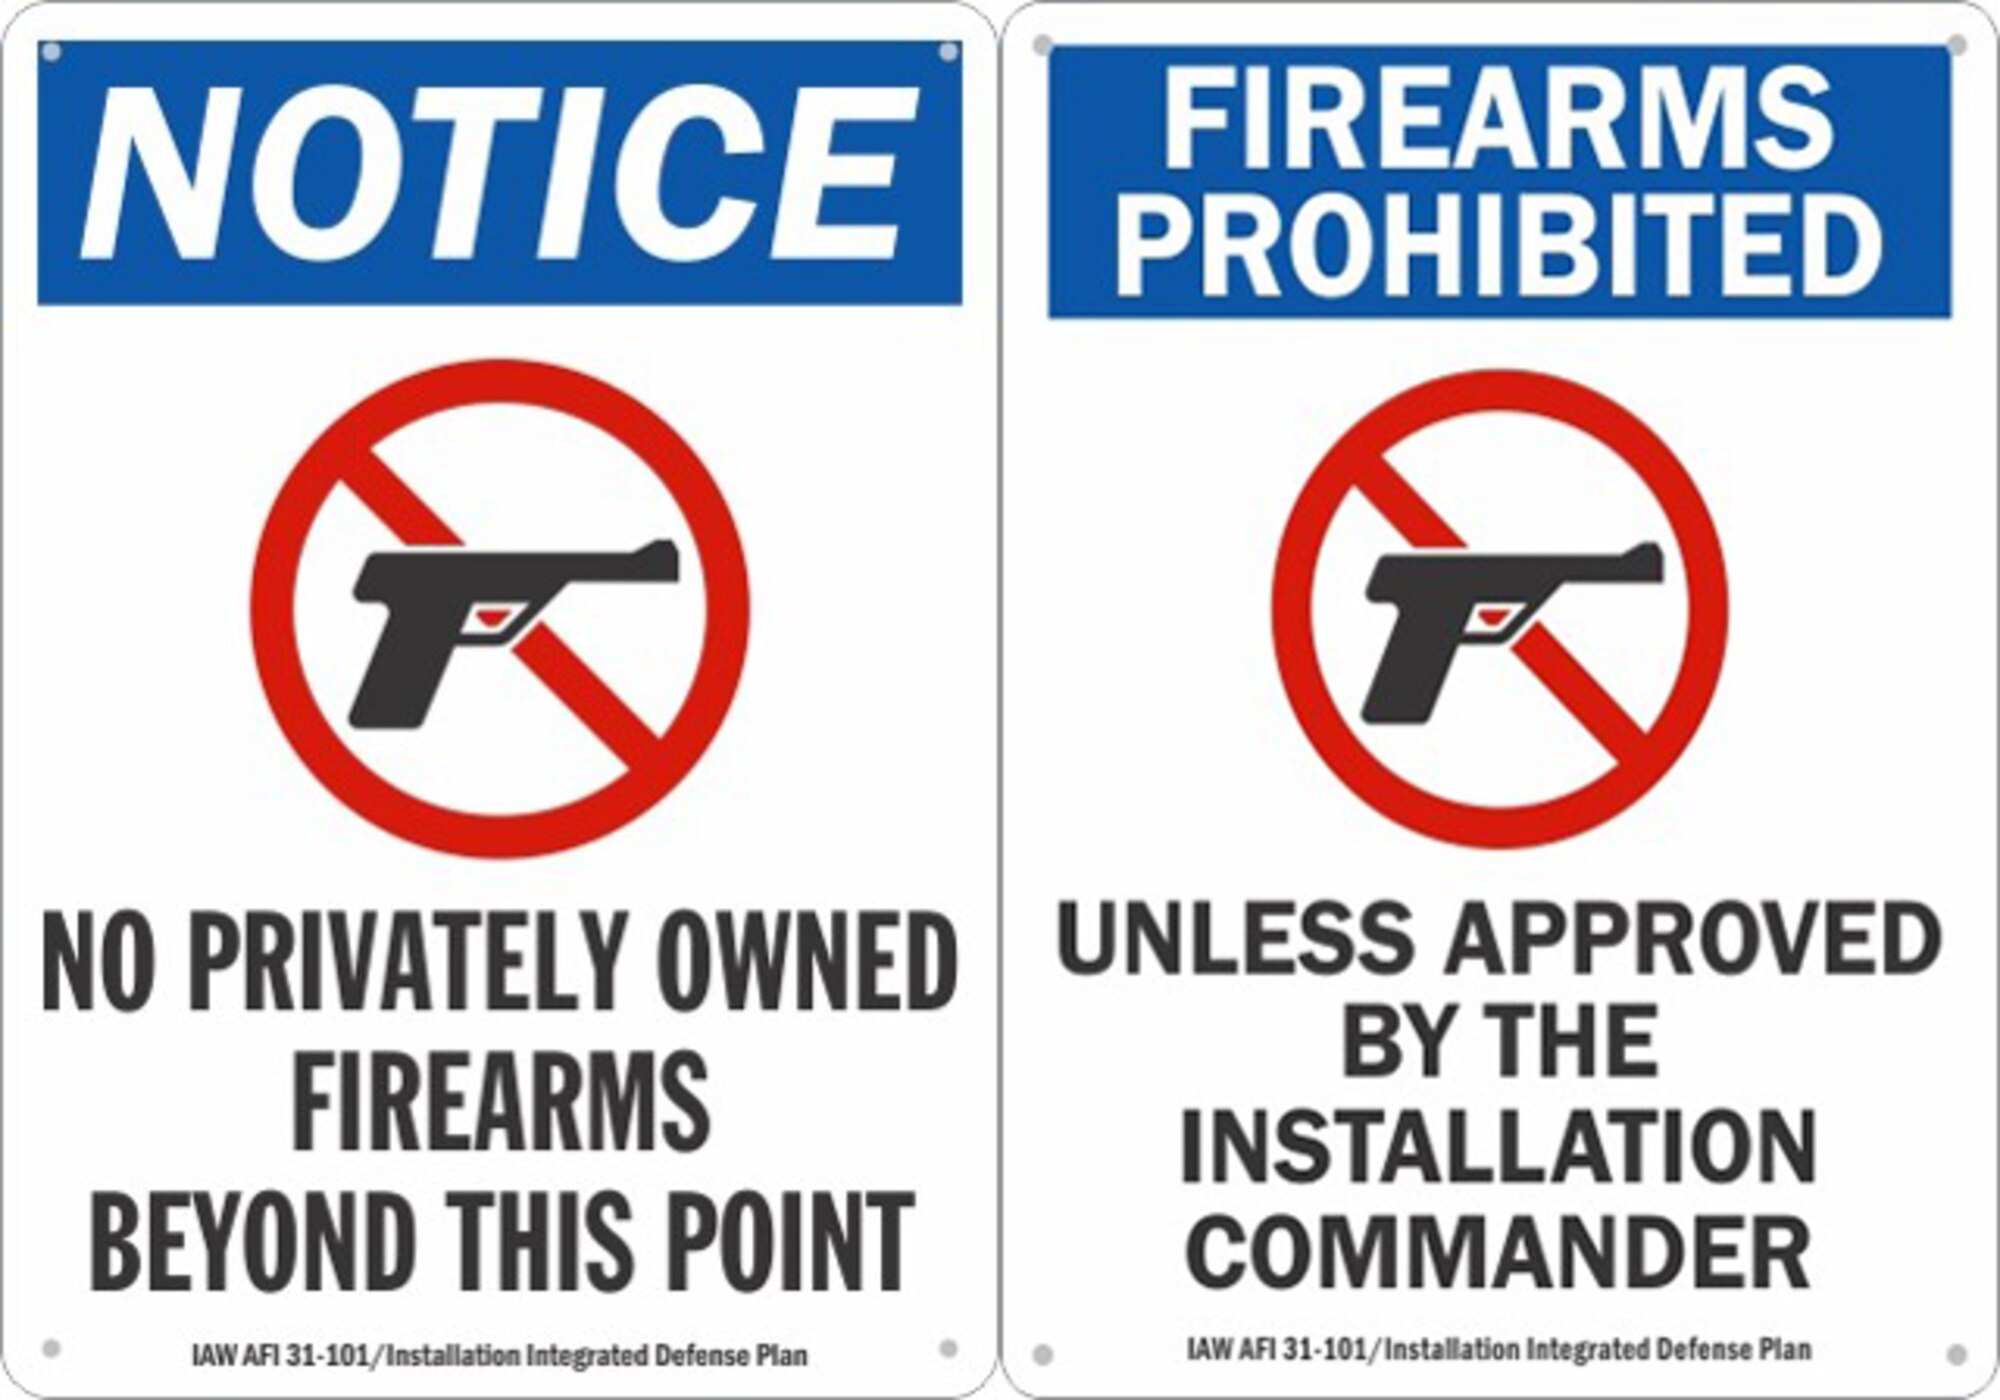 Eglin firearm policy